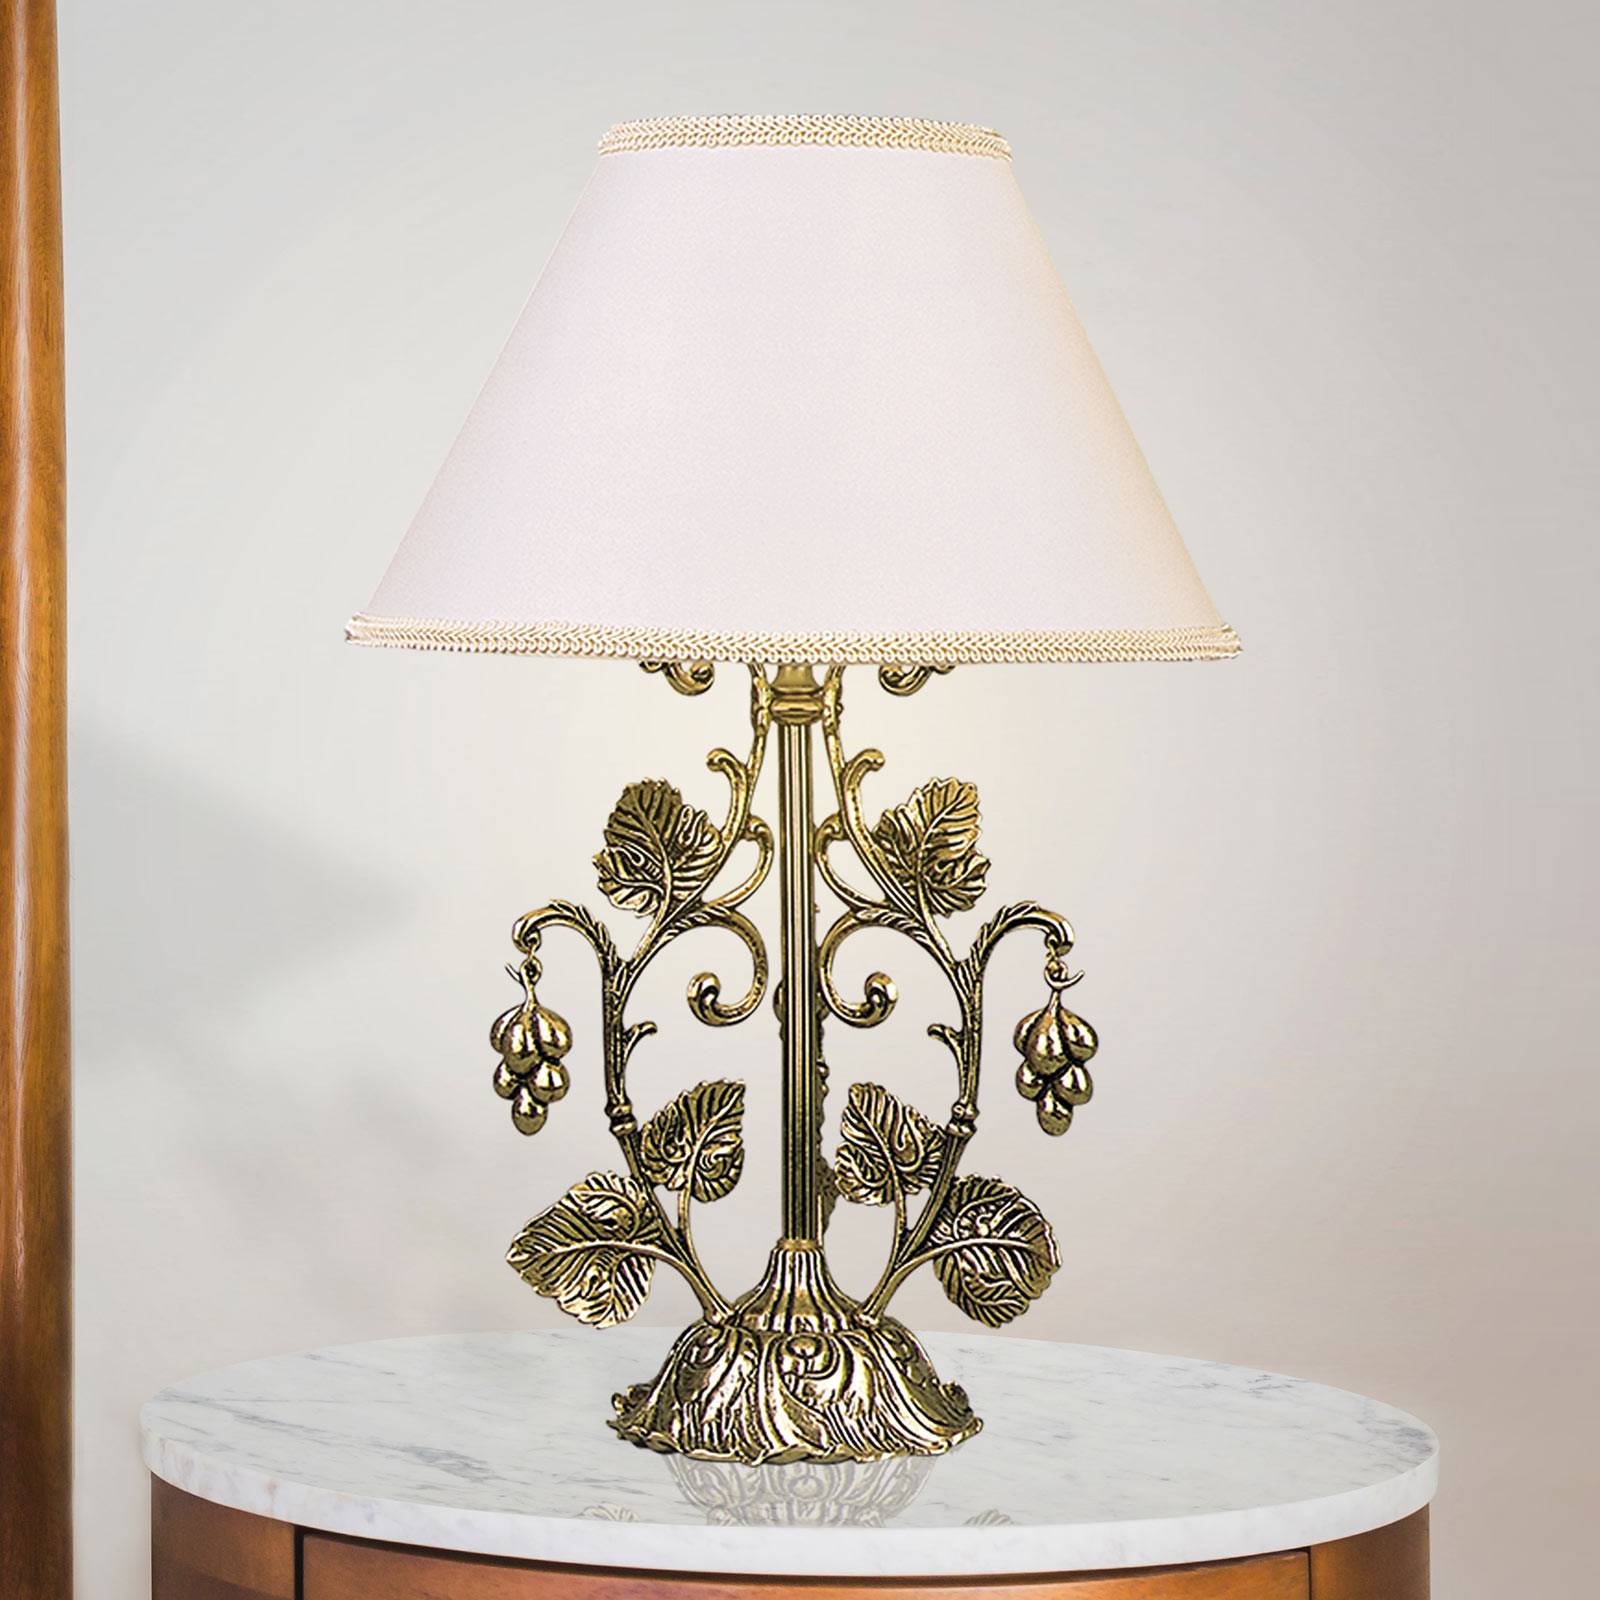 Image of Lampe à poser Albero dorée brunie polie, blanche 8433879060790